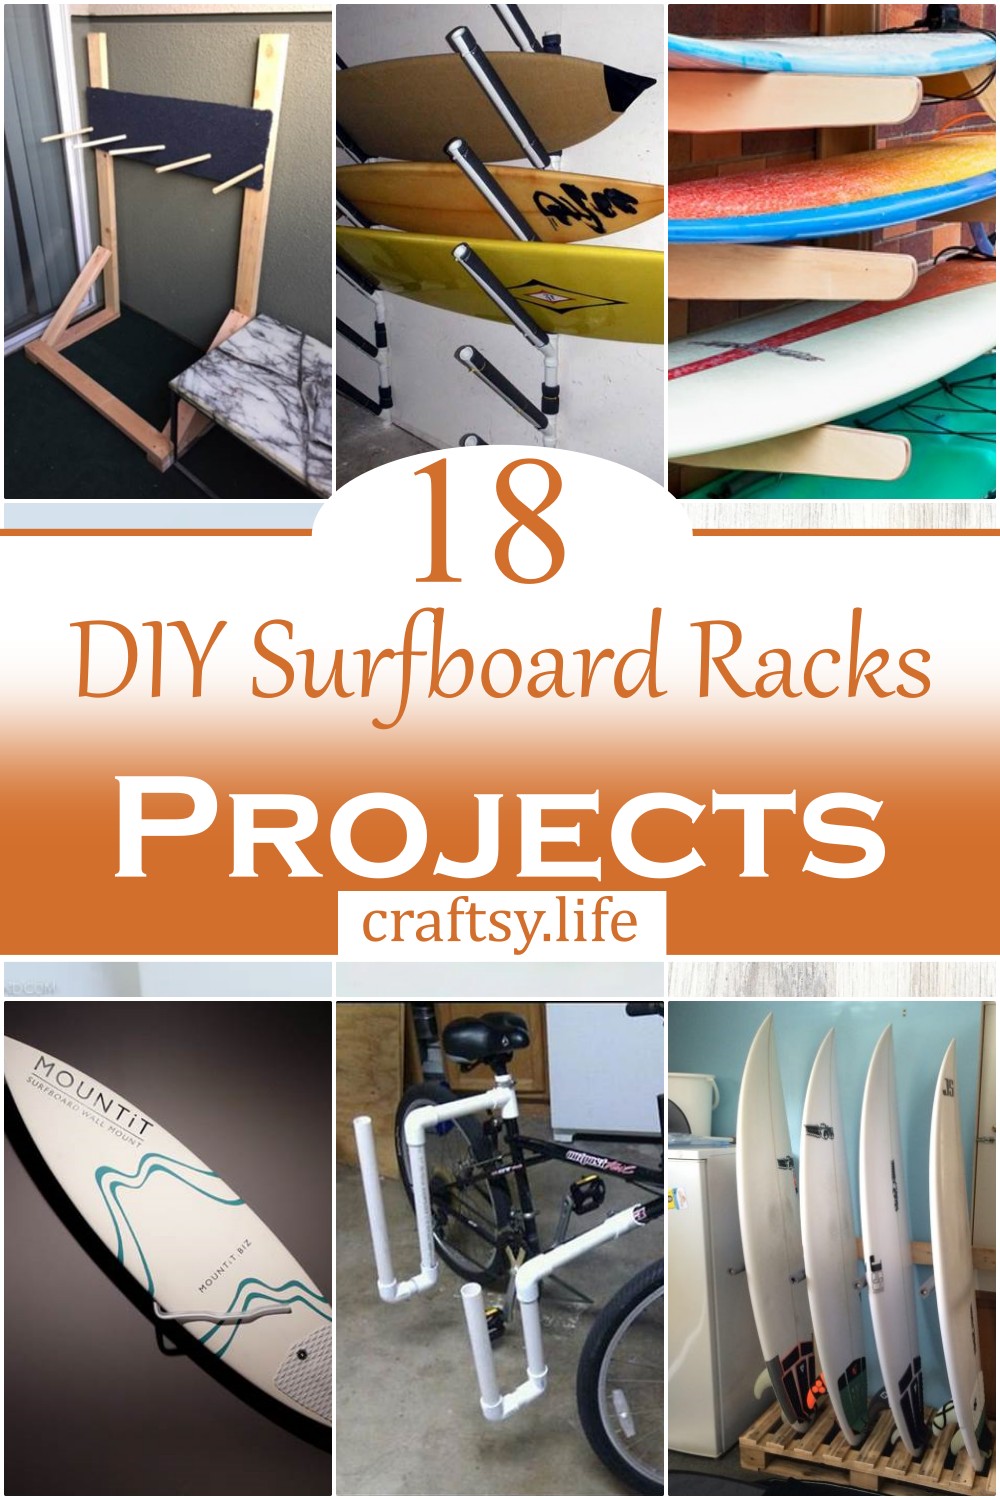 DIY Surfboard Racks